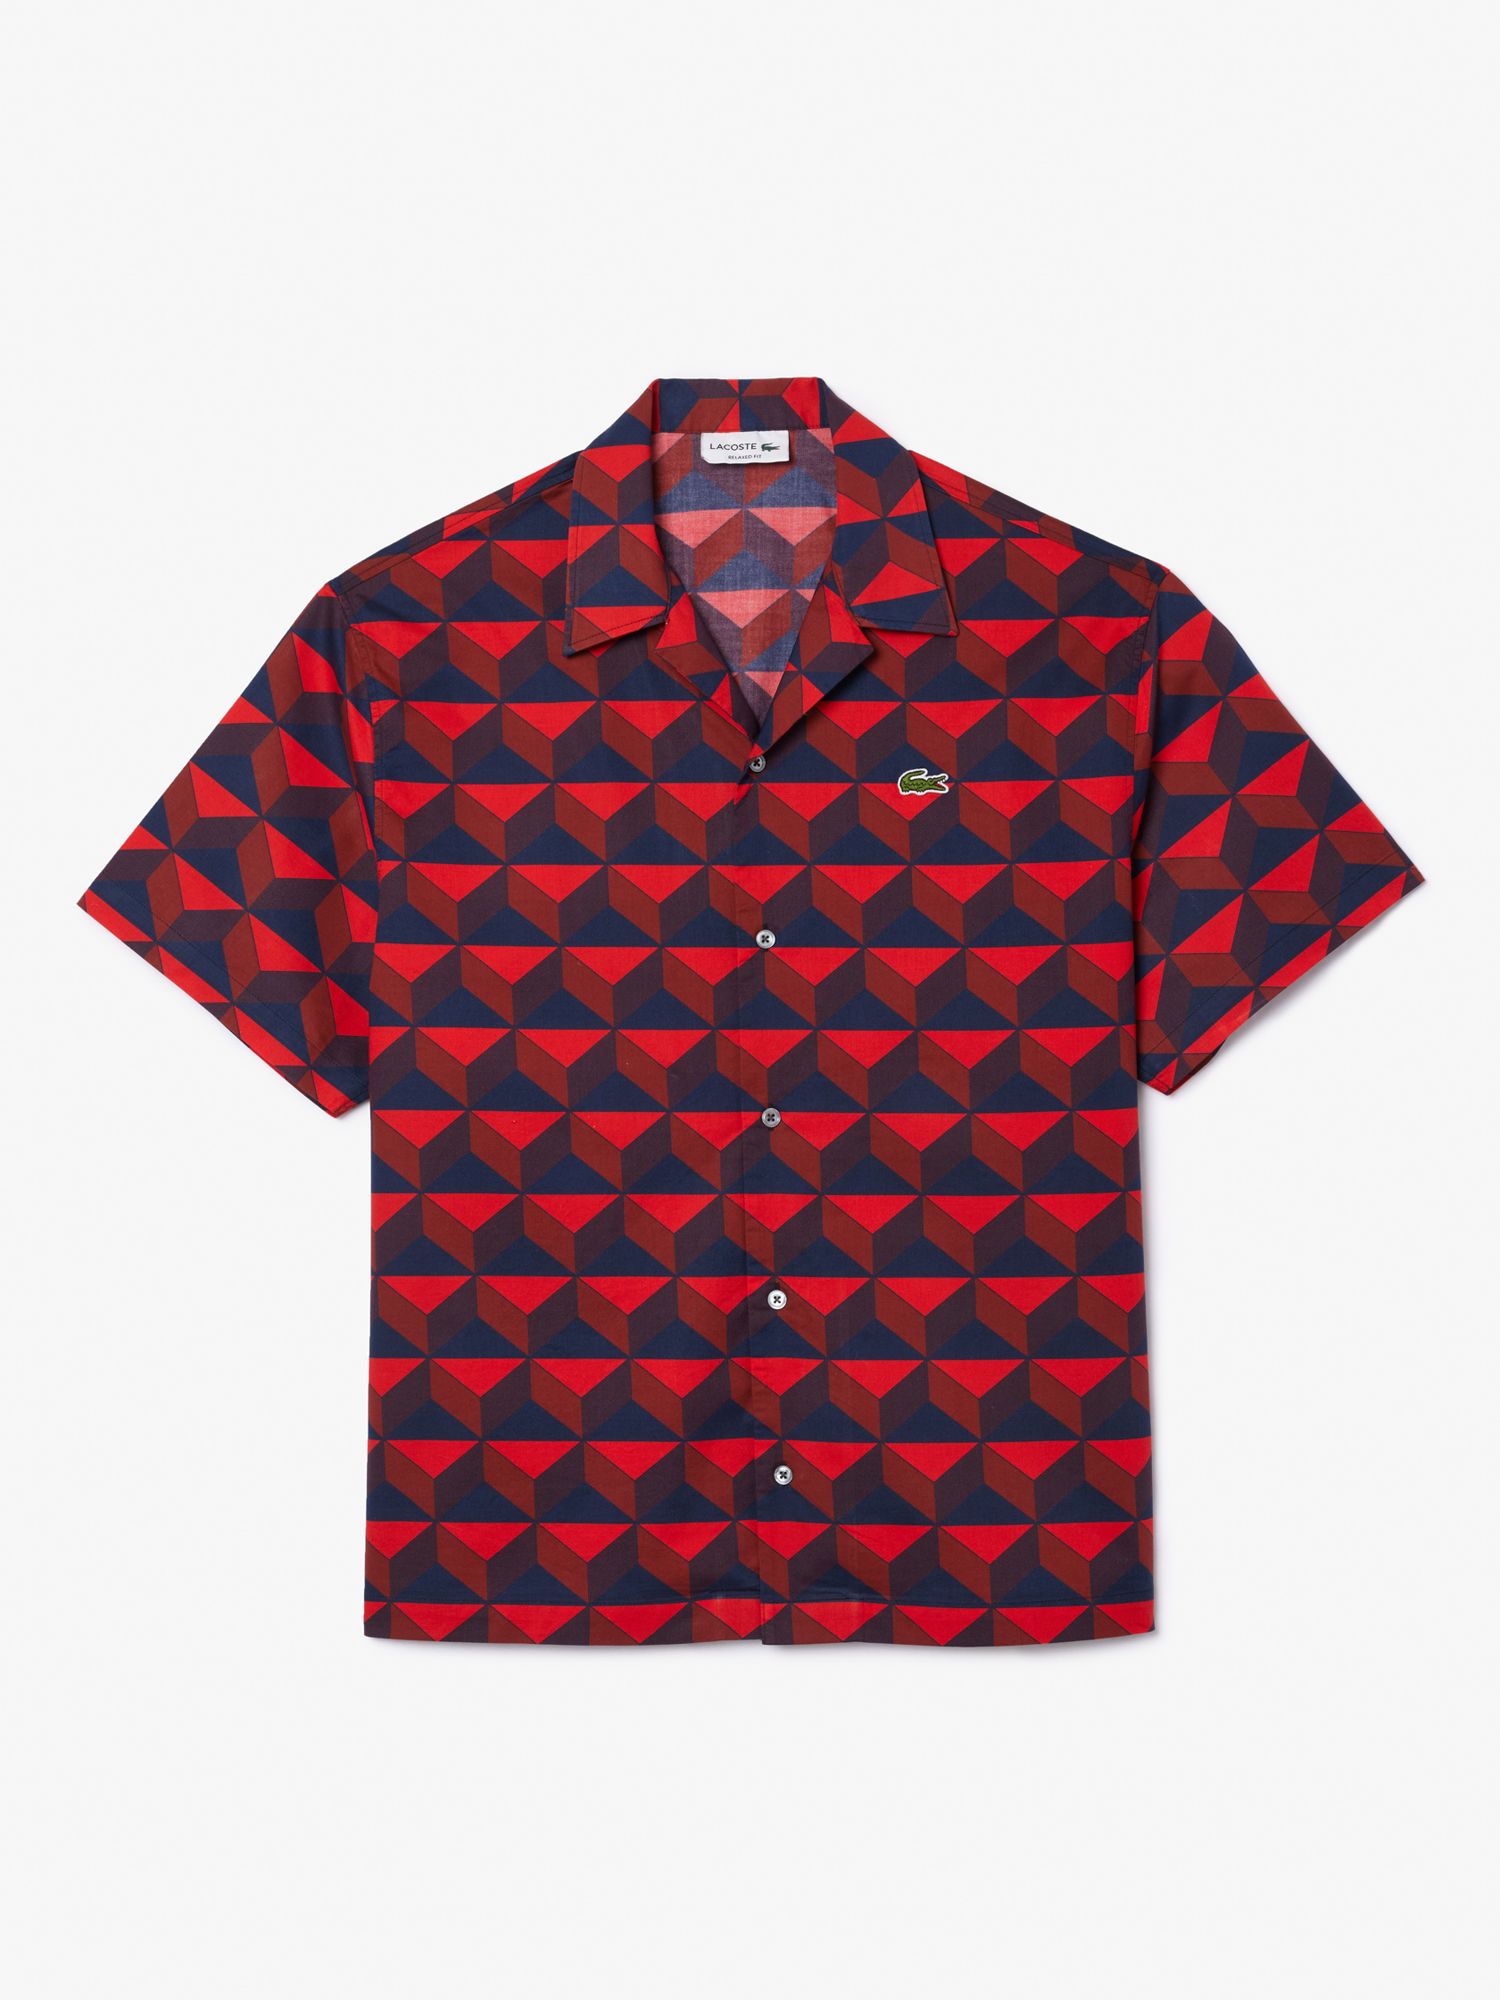 Lacoste Short Sleeve Robert George Print Shirt, Red/Multi, XXL